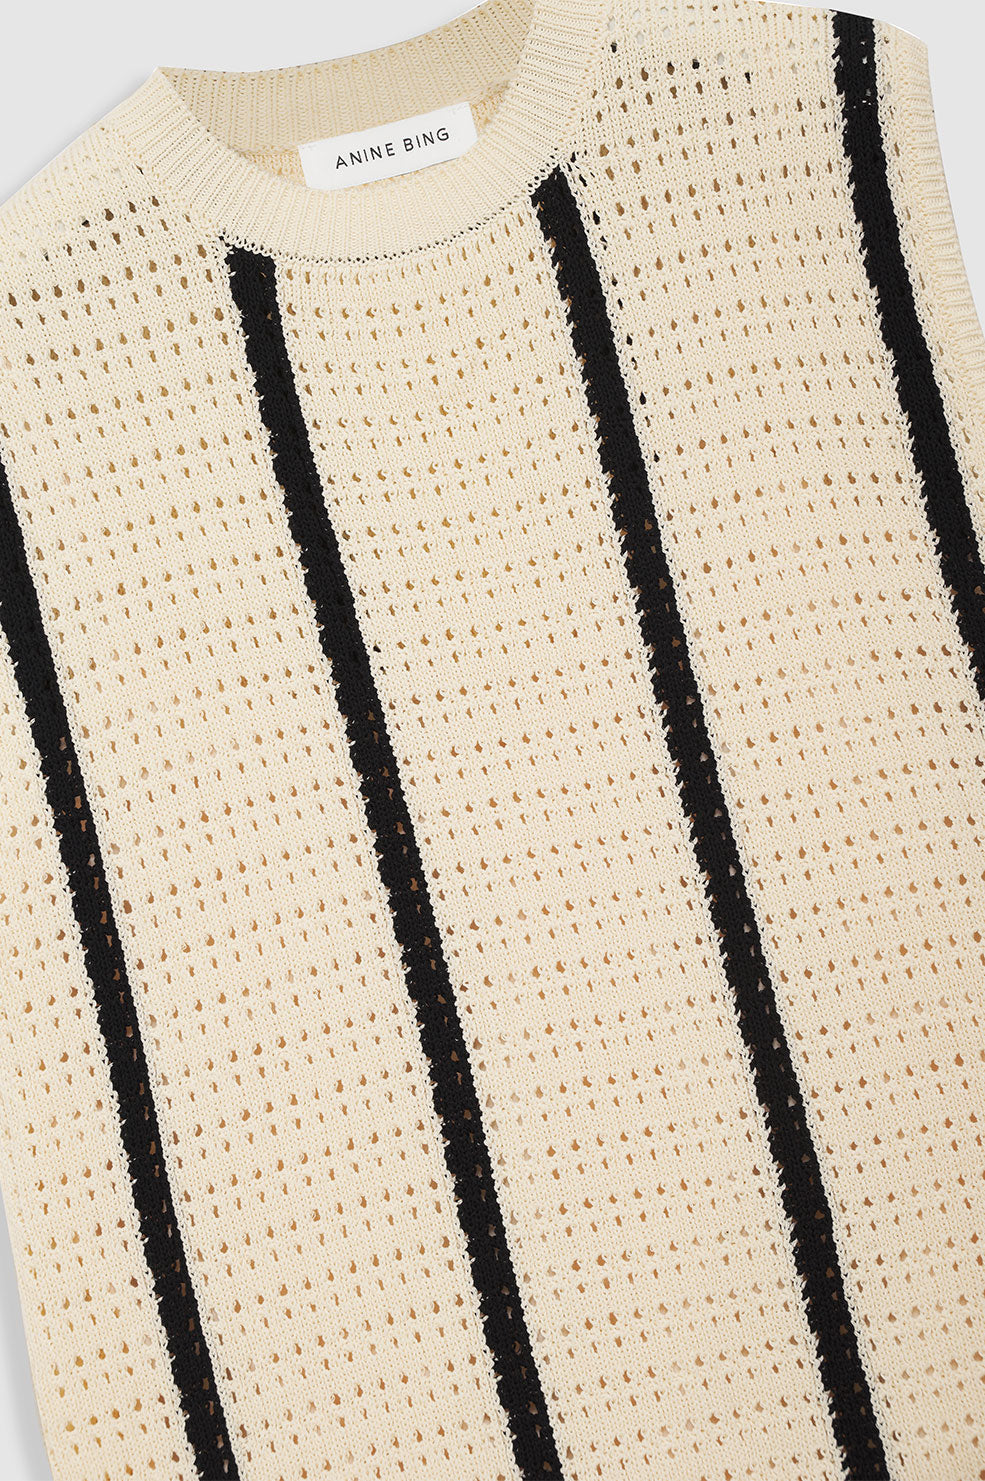 ANINE BING Lanie Dress - Ivory And Black Stripe